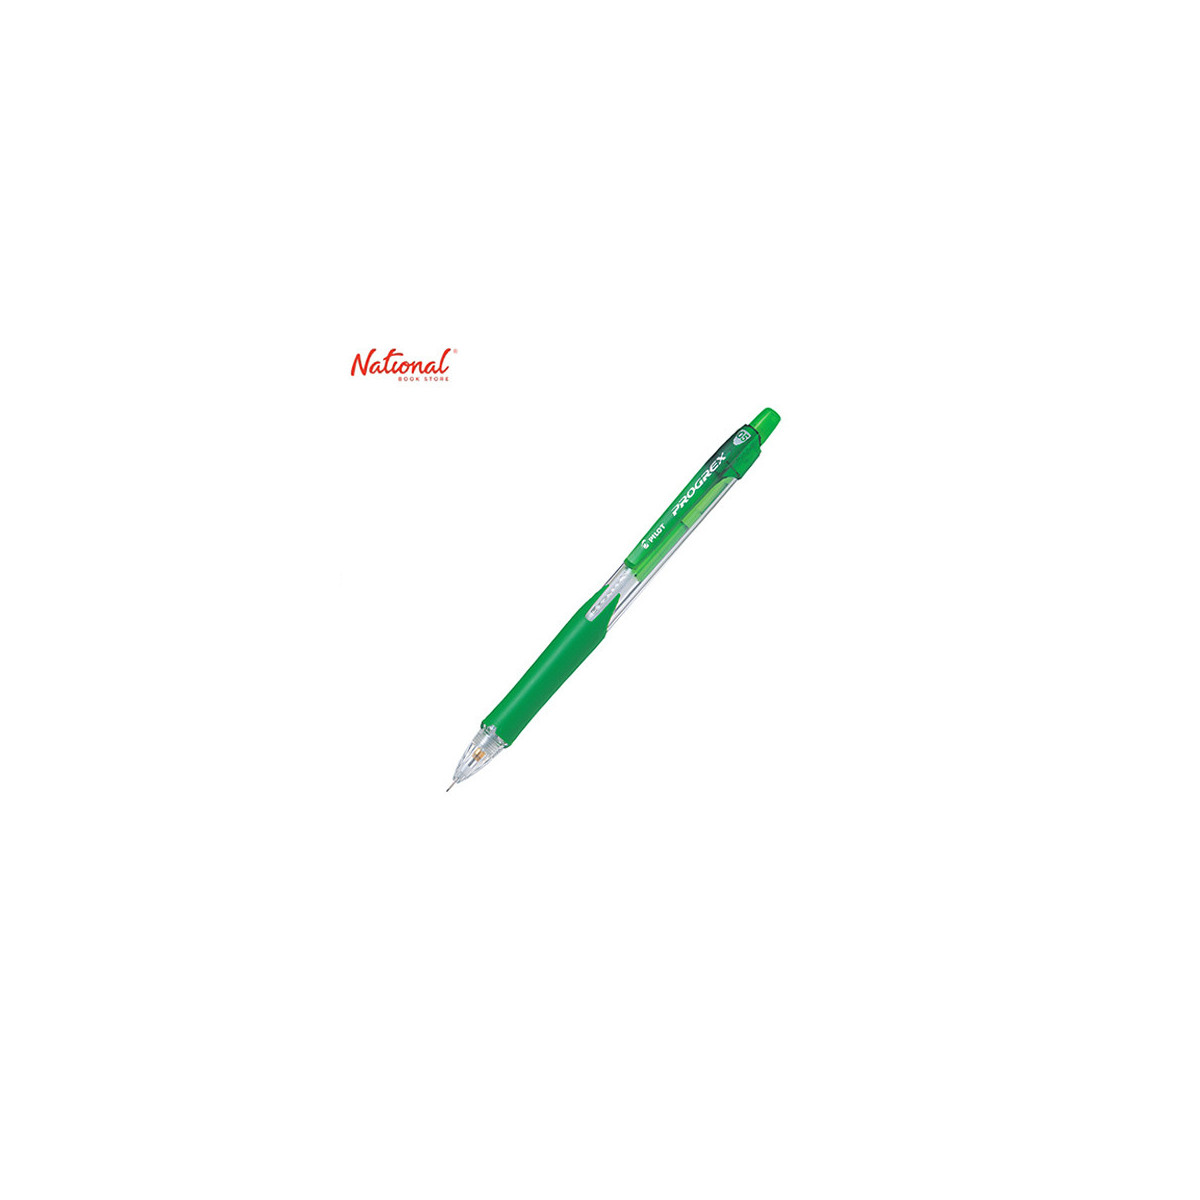 Pilot Mechanical Pencil Progrex With Rubber Grip 0.5mm, Soft Green H125C-SL-SG